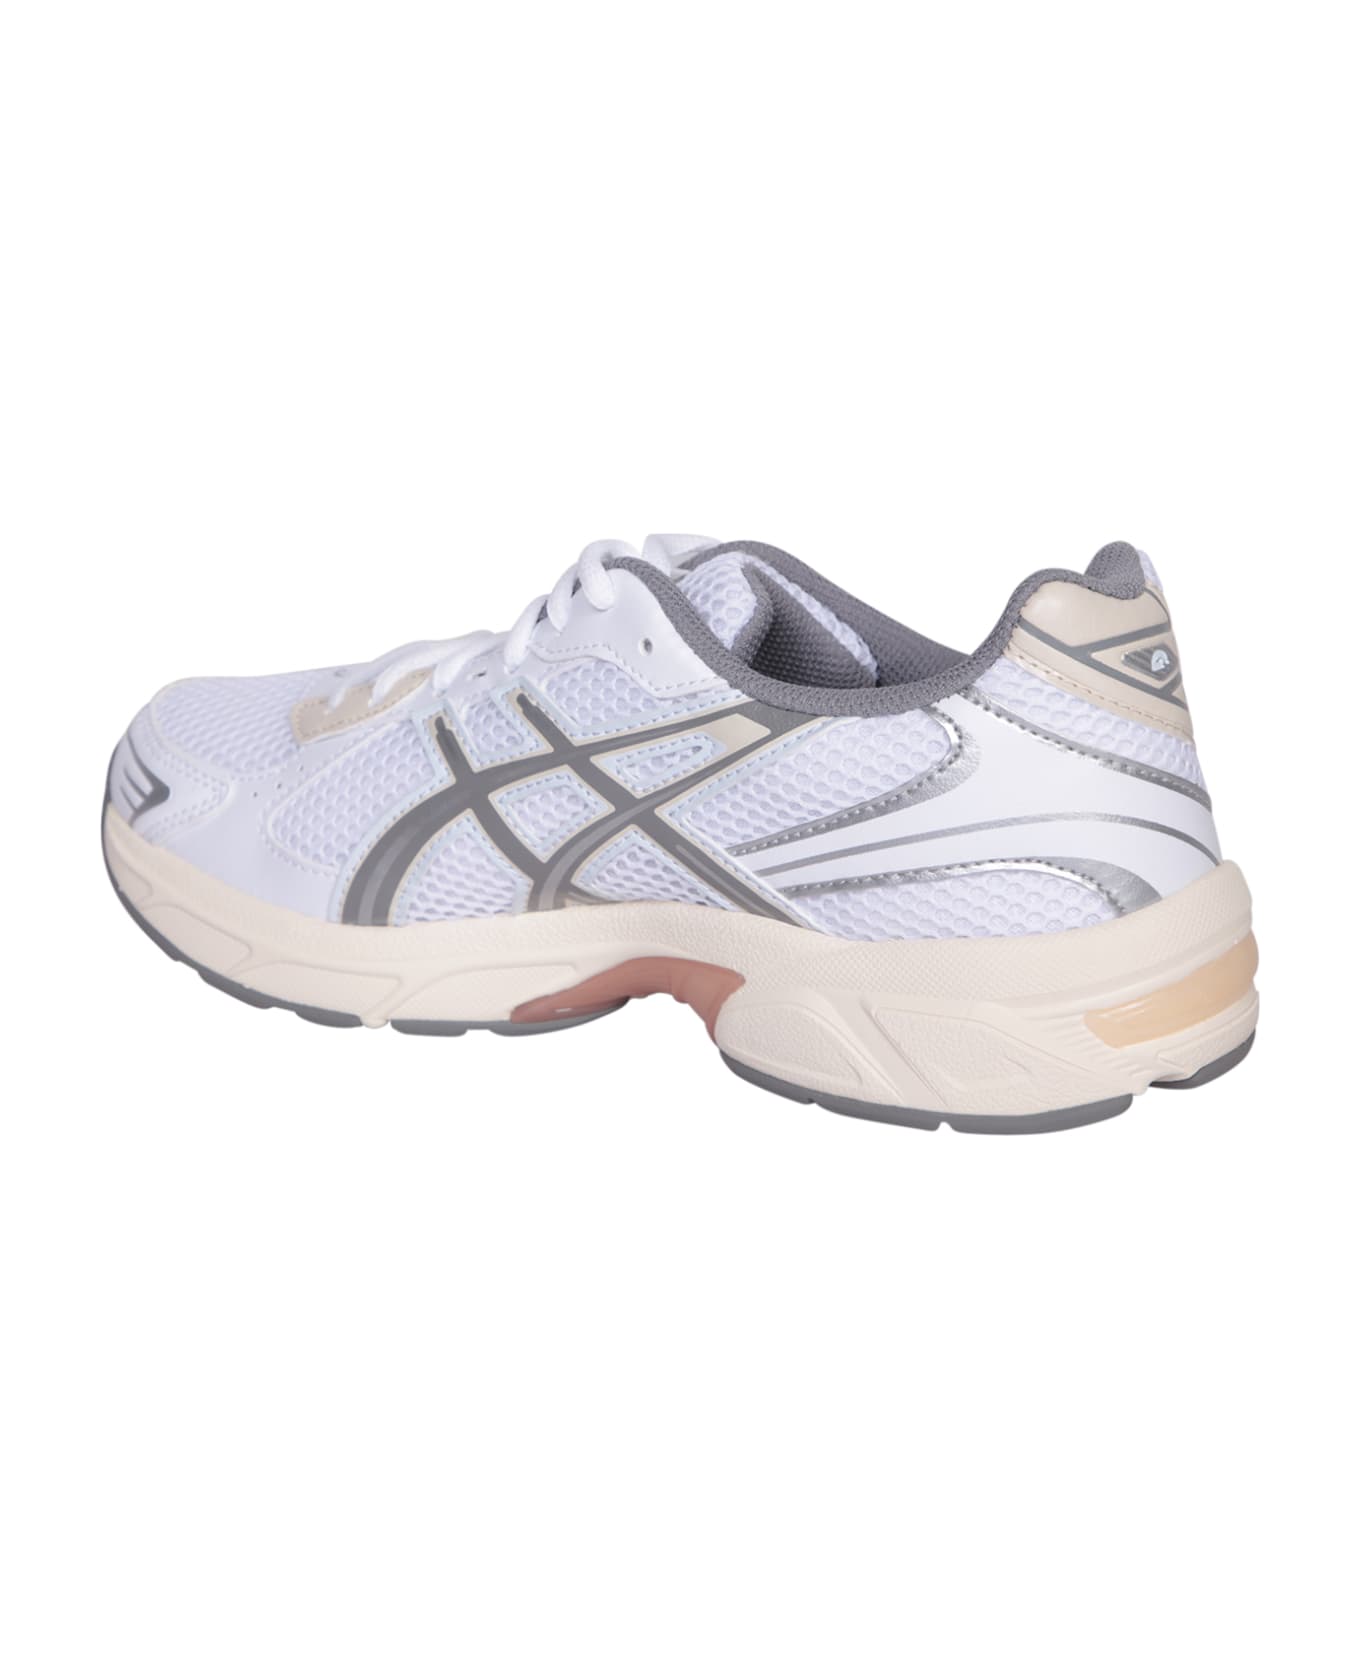 Asics Gel-1130â ¢ Sneakers - White